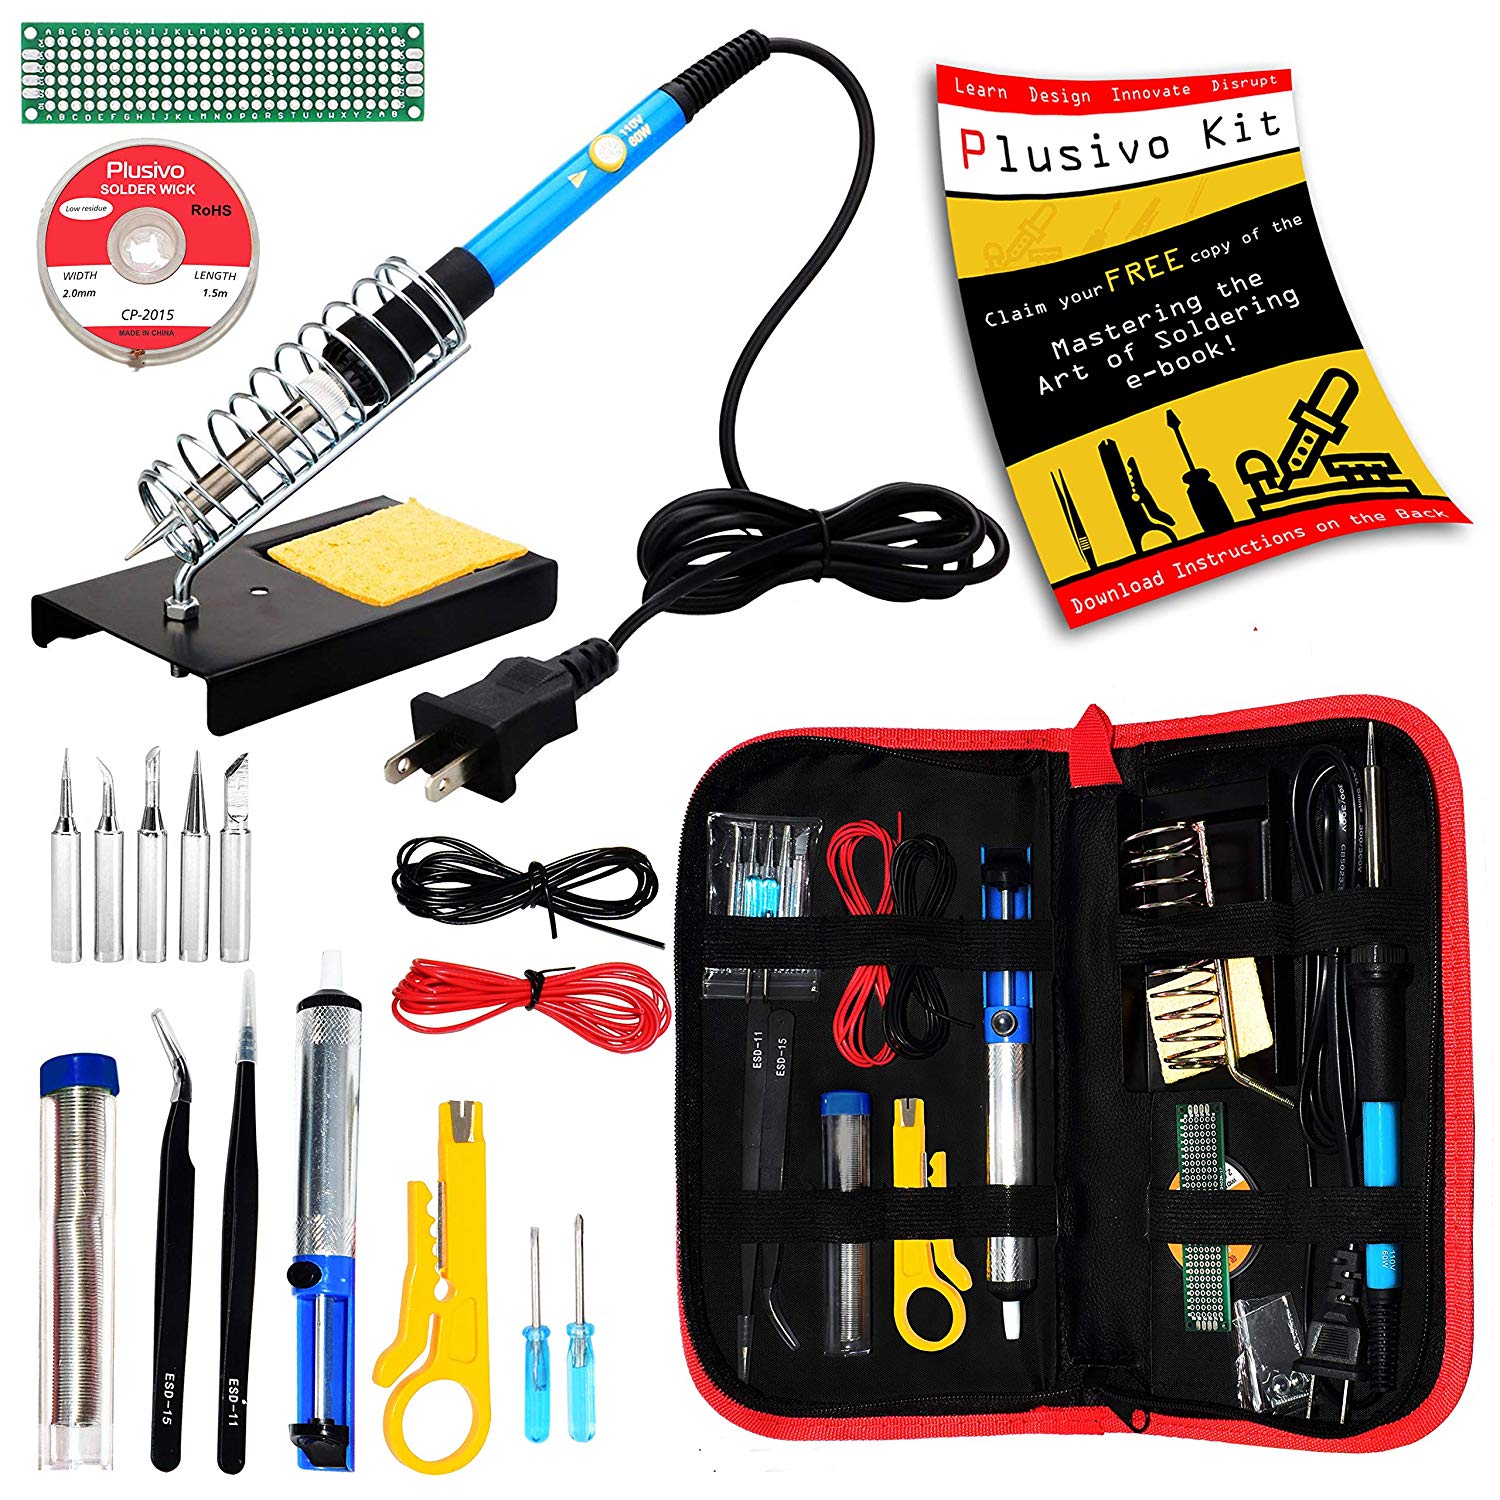 Plusivo soldering kit